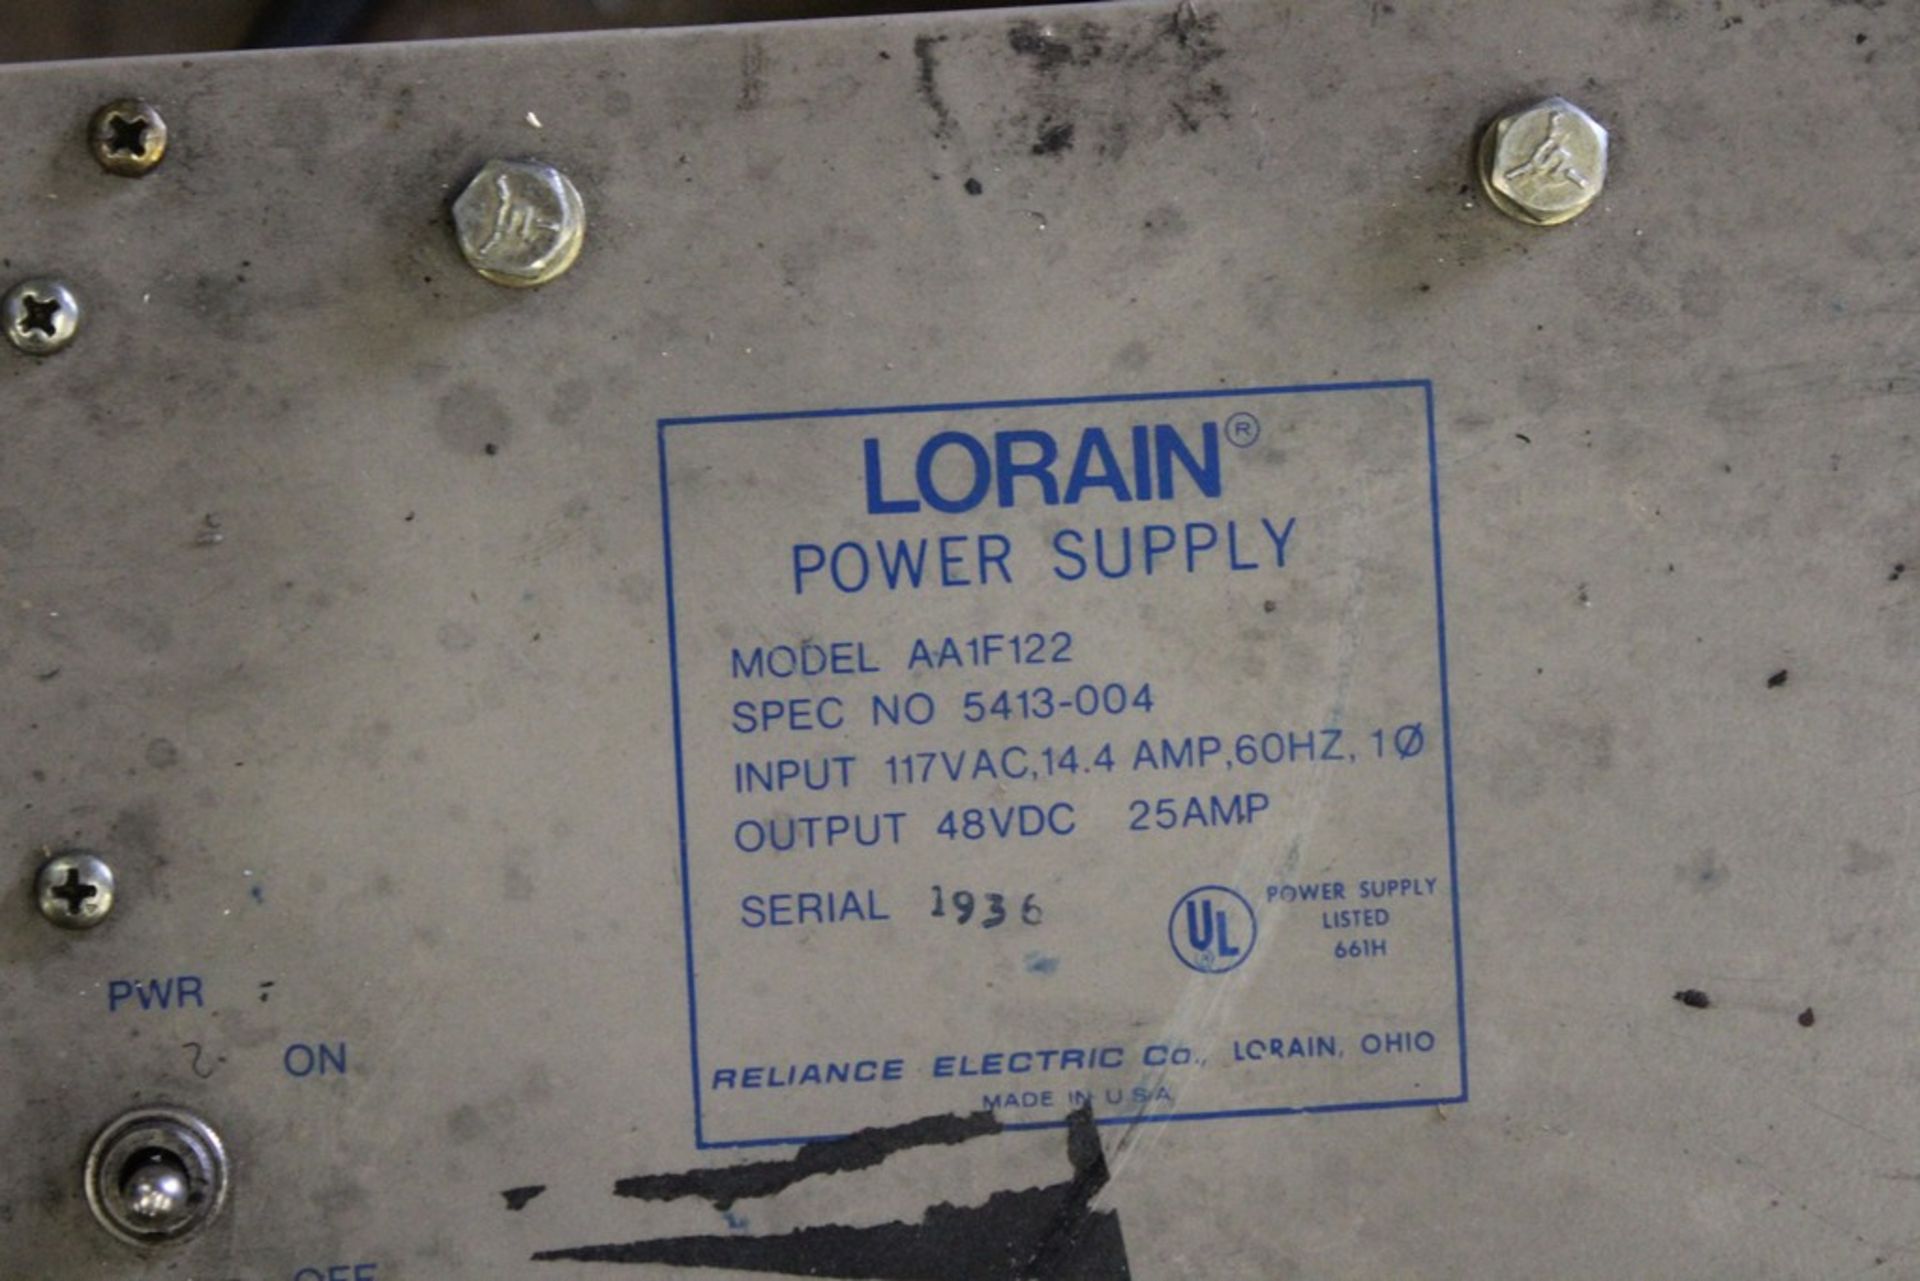 LORIAN MODEL AA1F122 48V DC POWER SUPPLY - Image 2 of 2